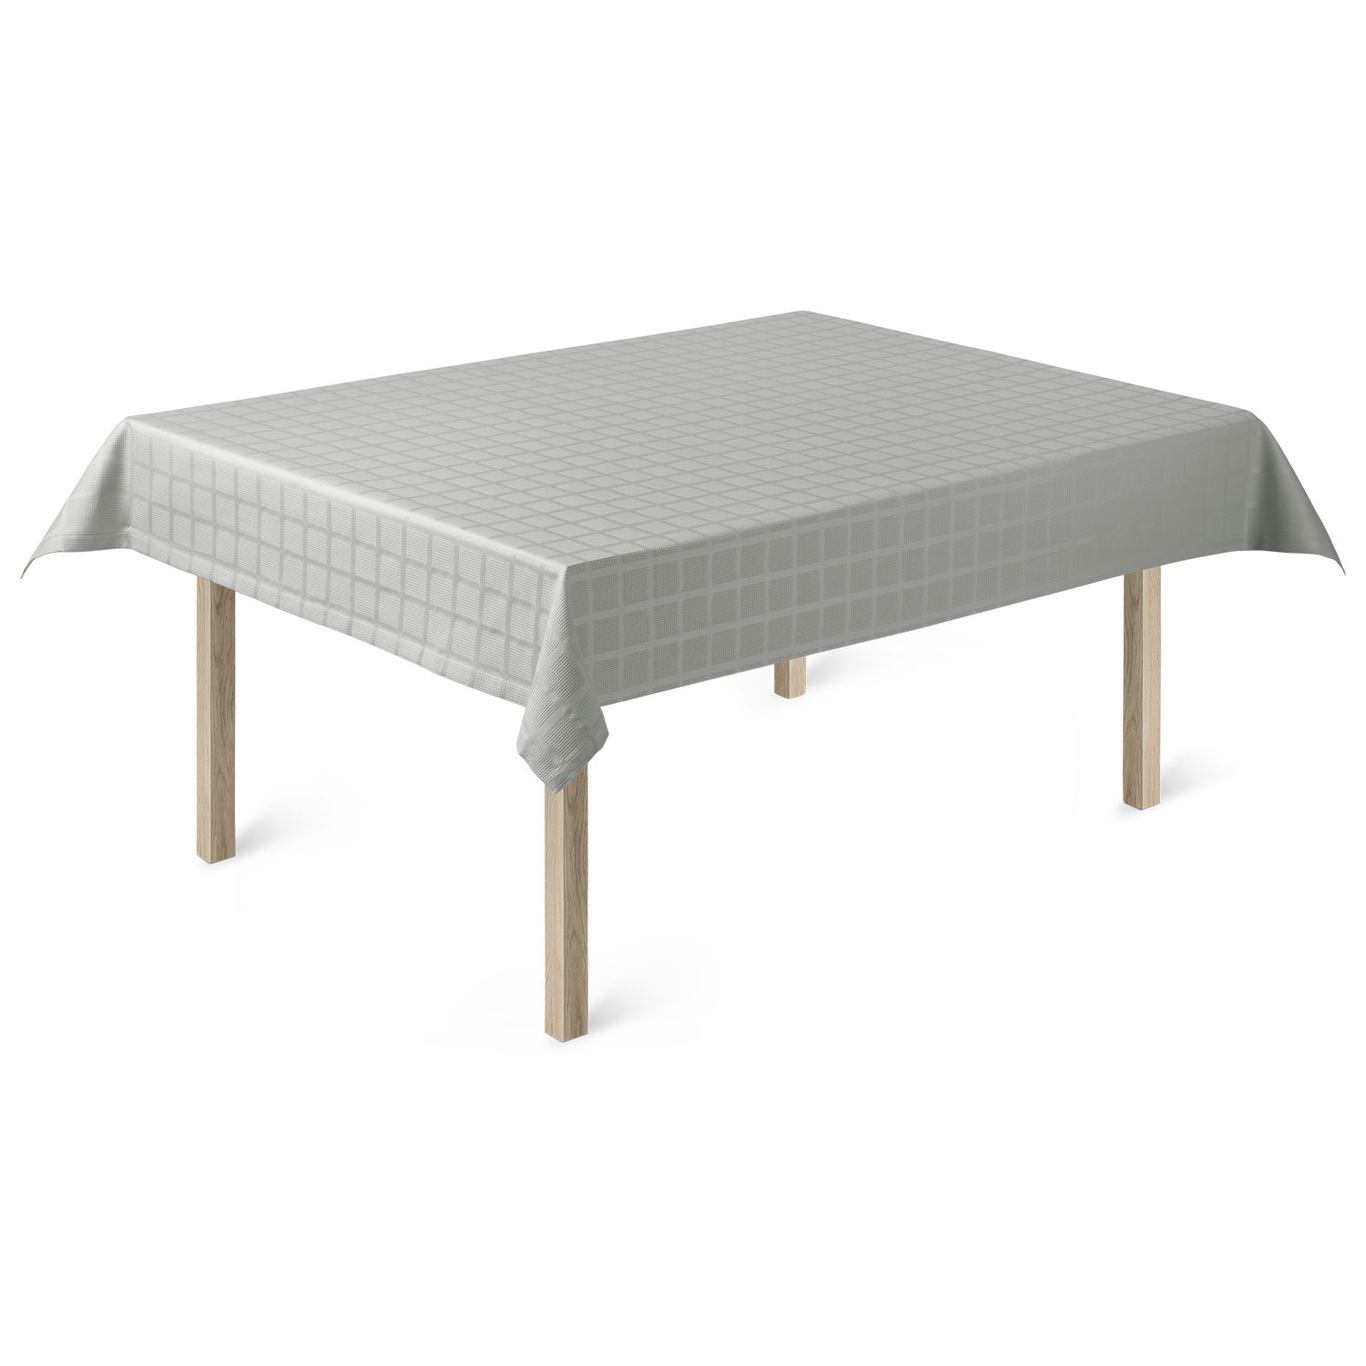 Brick Damask Table Cloth Grey, 150x370 cm